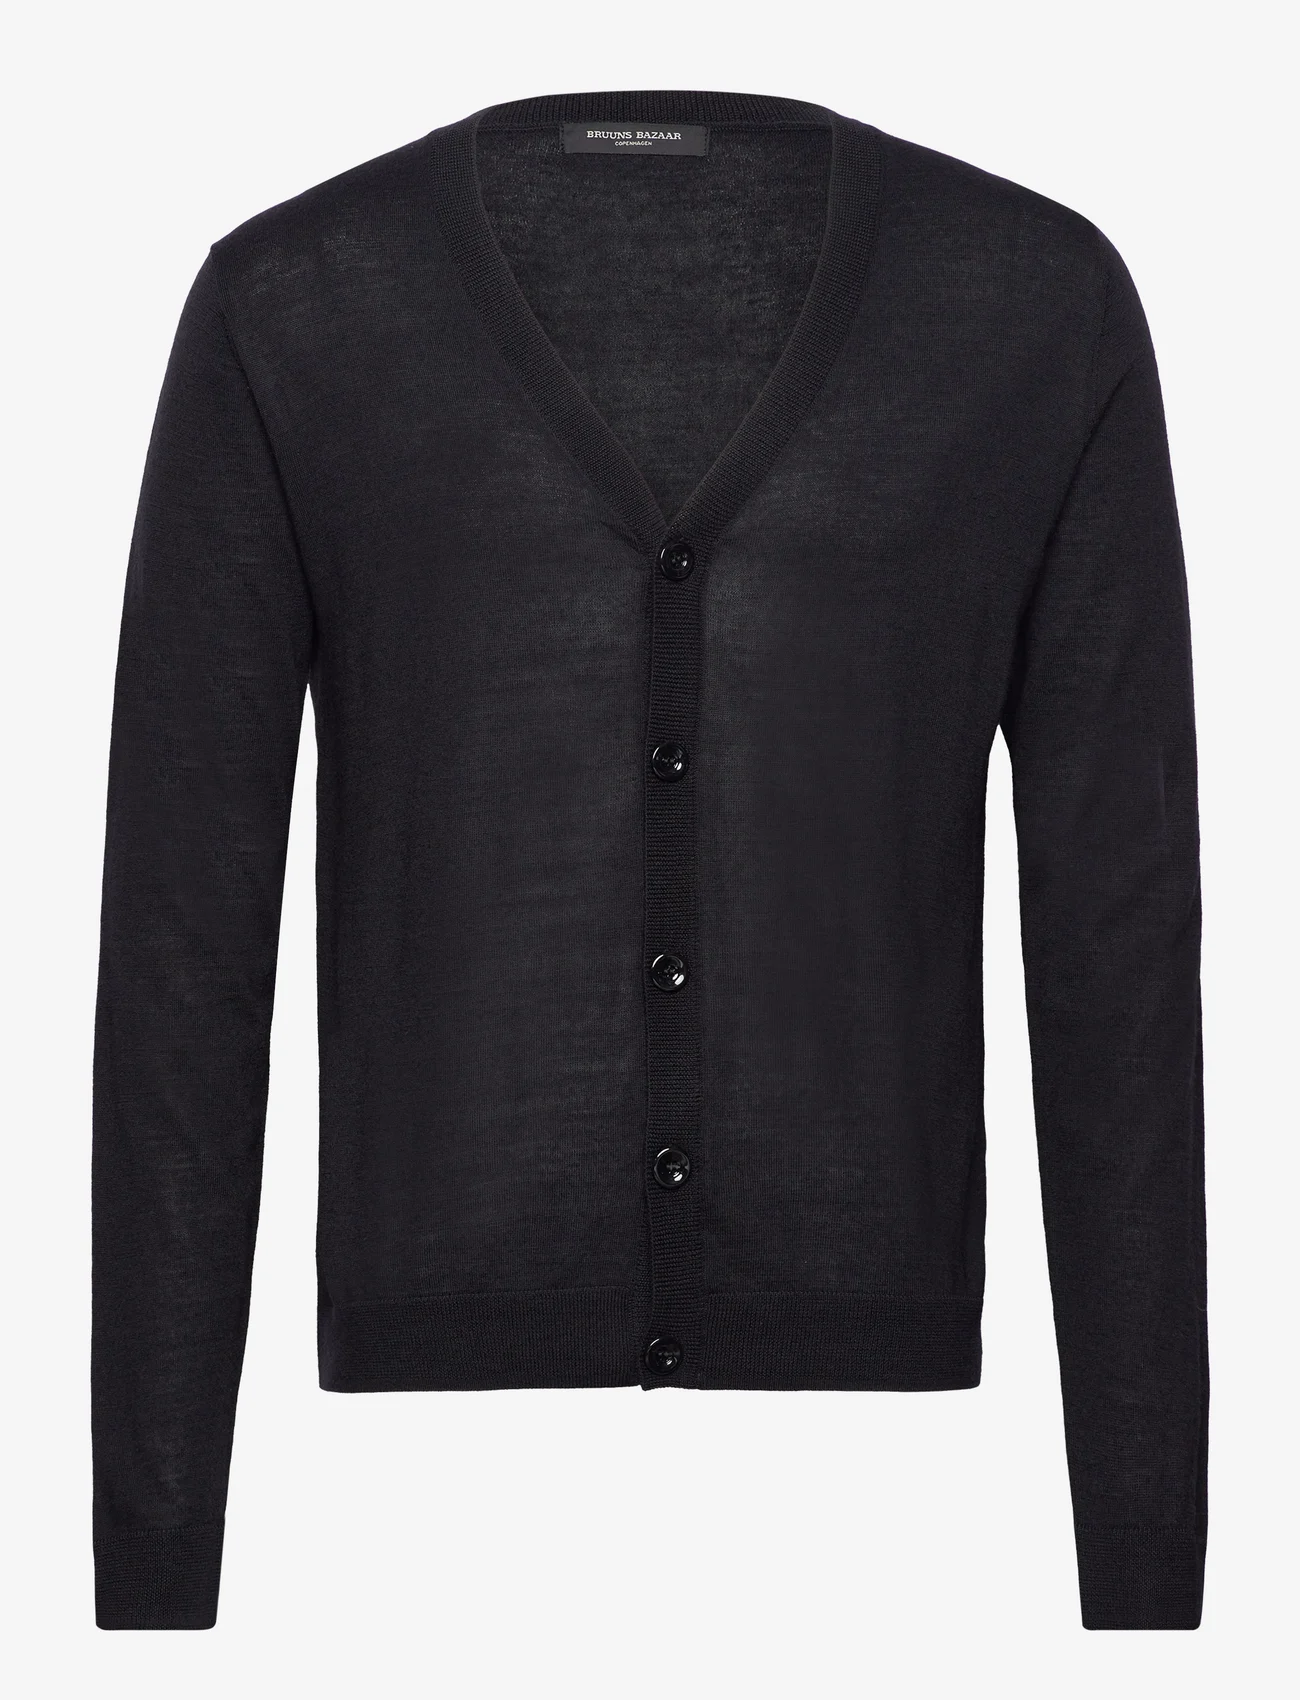 Bruuns Bazaar - CharlesBBCardigan - trøjer - black - 0